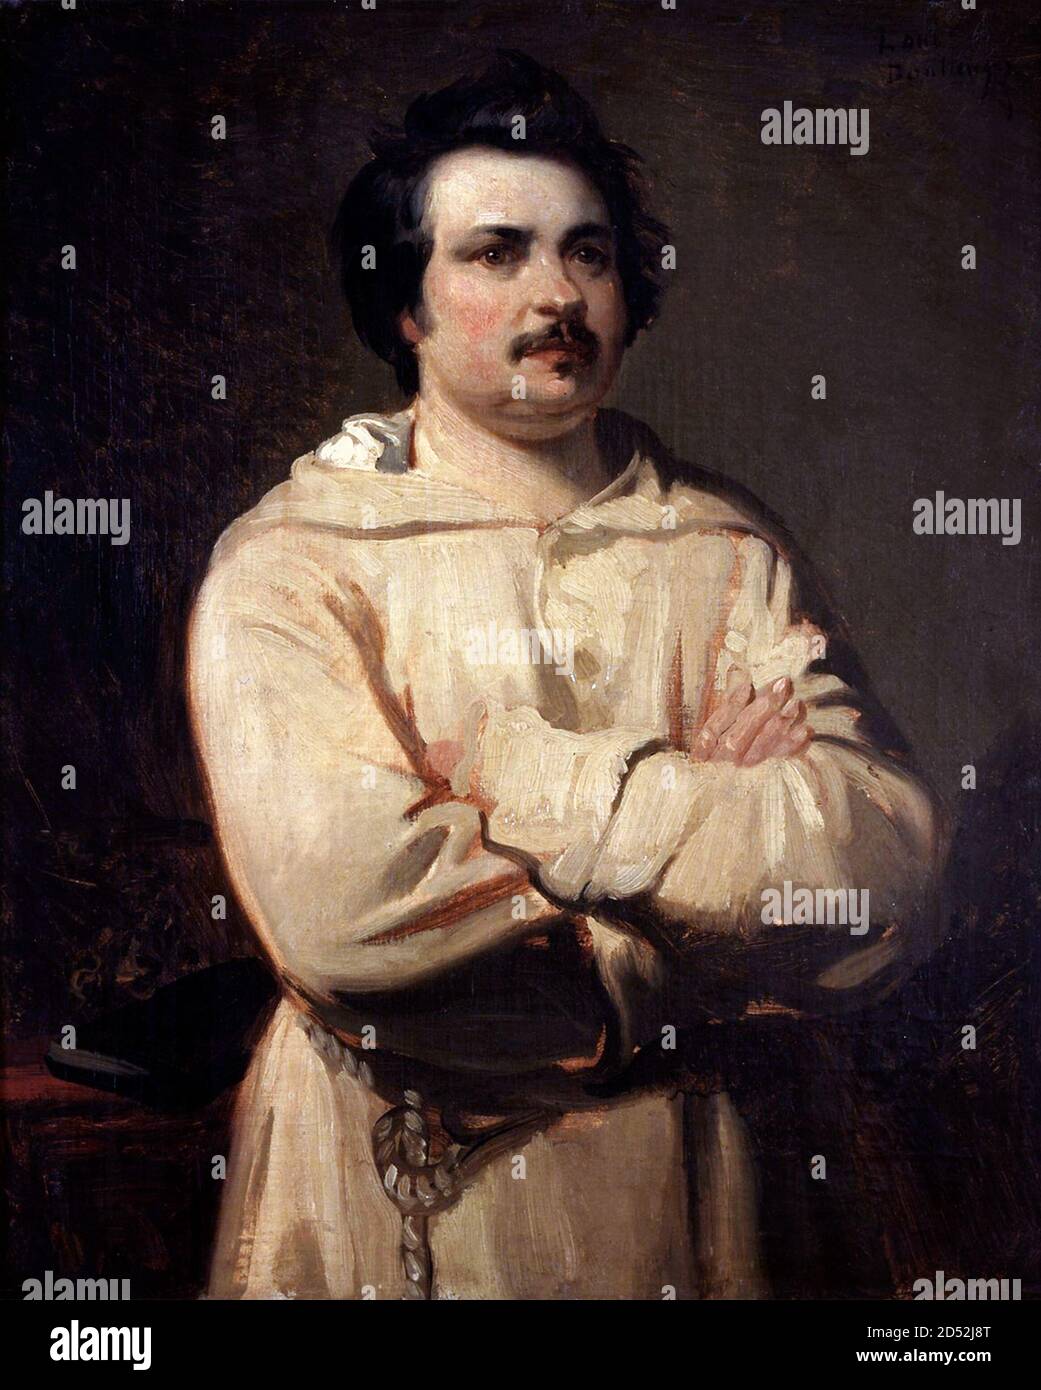 Honoré de Balzac. Portrait of the French novelist and playwright, Honoré de Balzac (1799-1850) by Louis Boulanger, oil on canvas, c.1837 Stock Photo